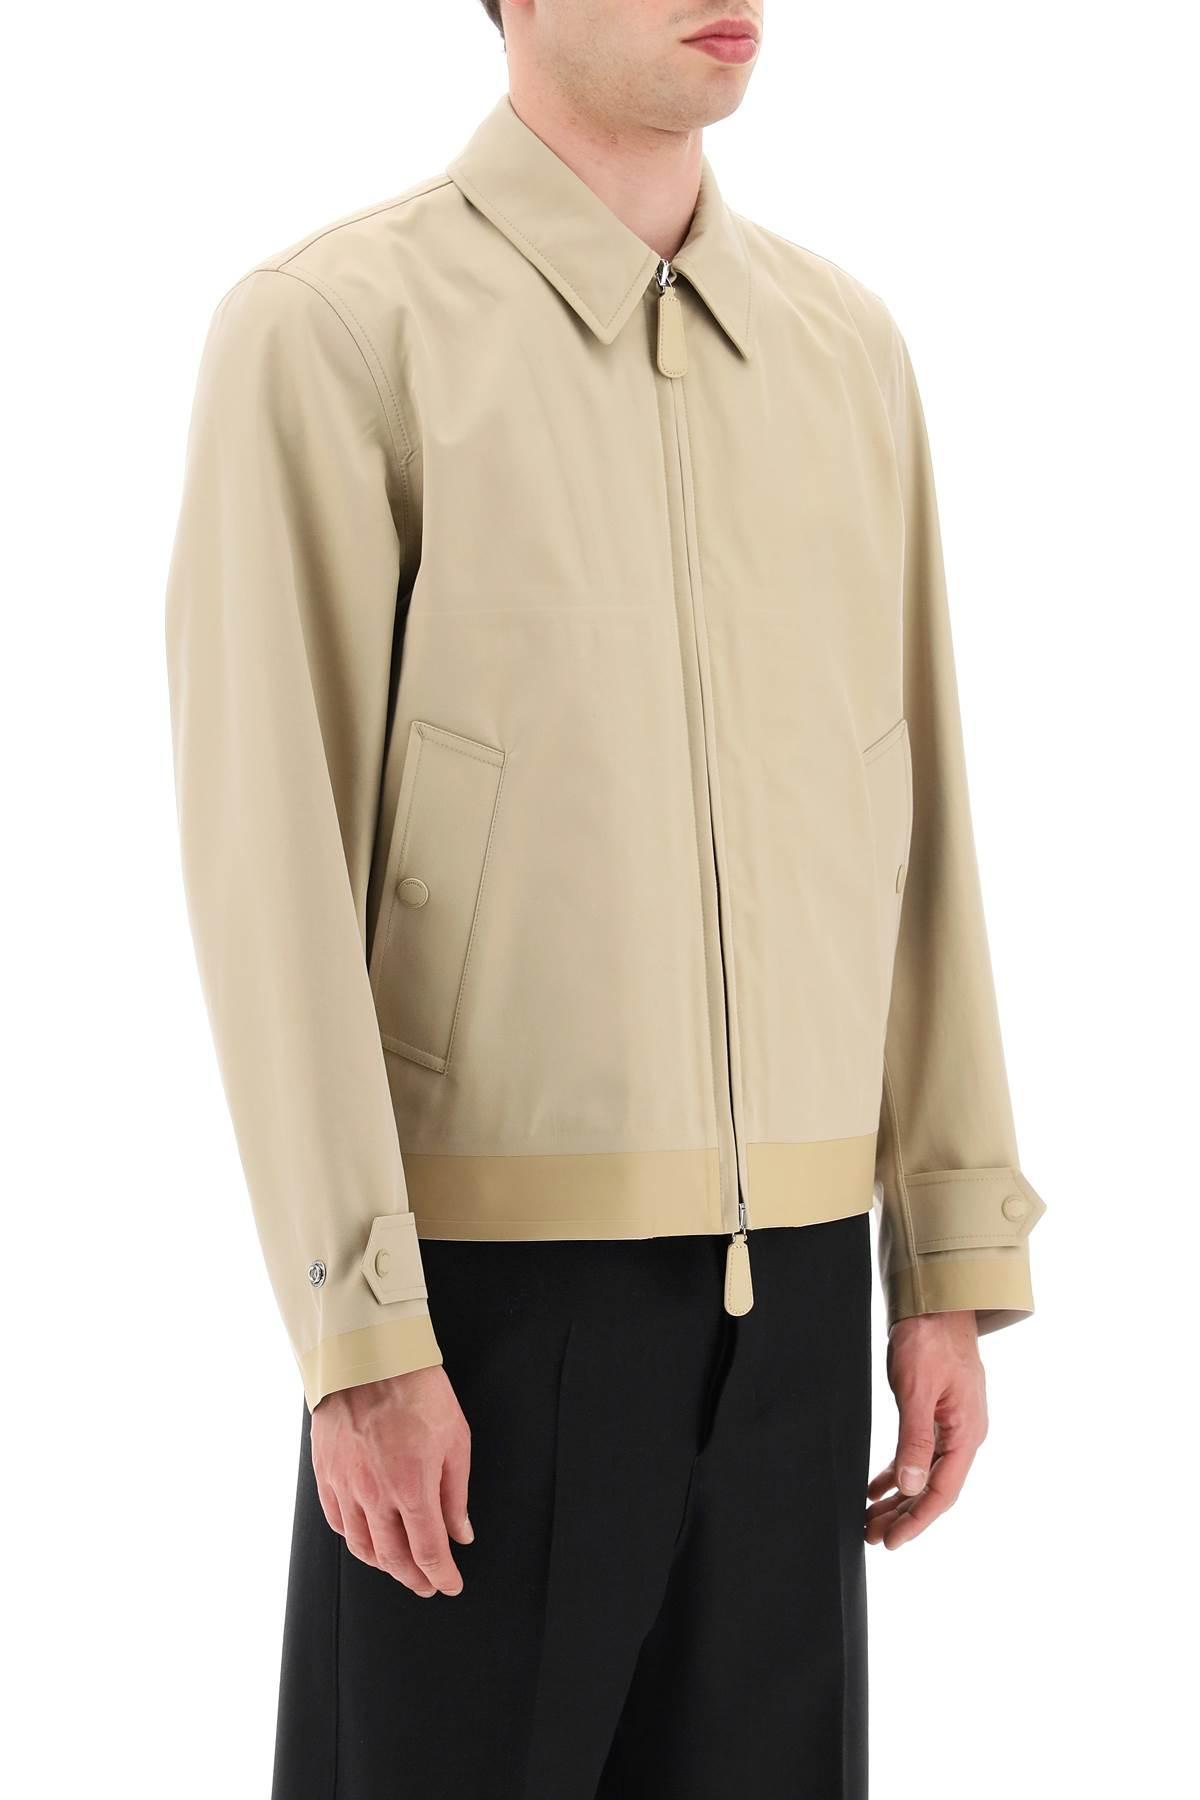 Burberry Bonded Cotton Harrington Jacket in Natural for Men | Lyst